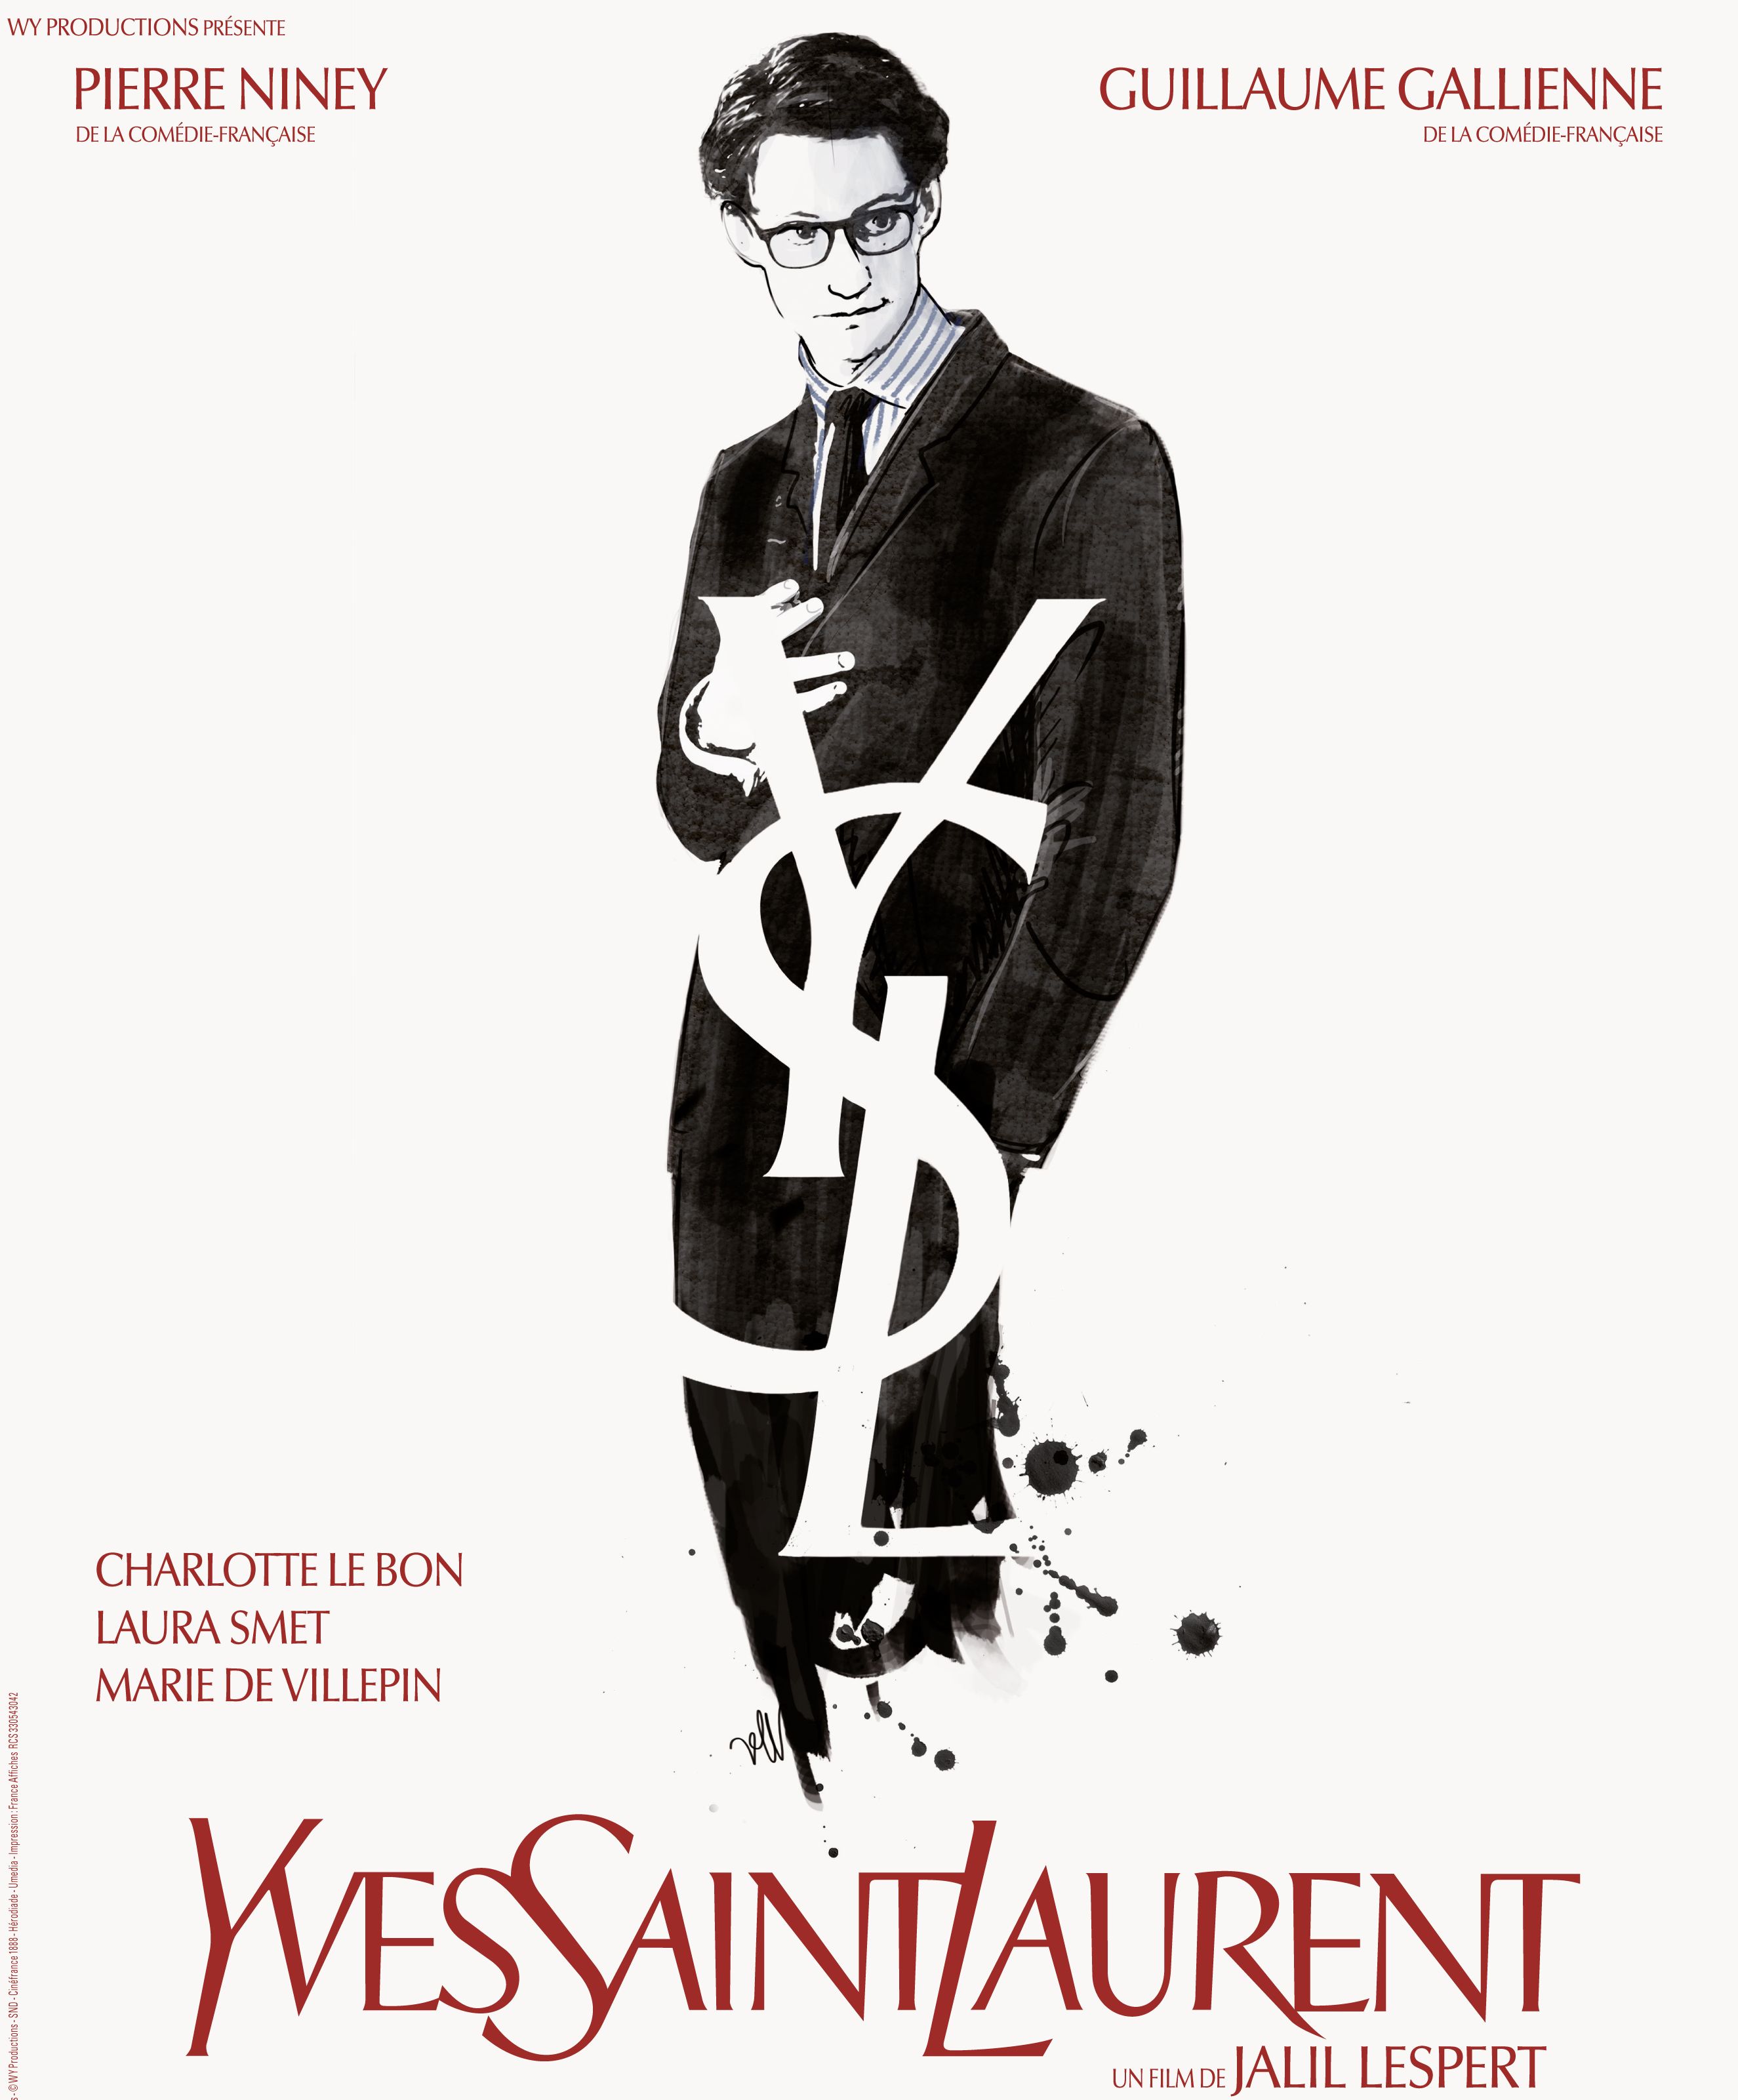 Yves Saint Laurent clean white poster